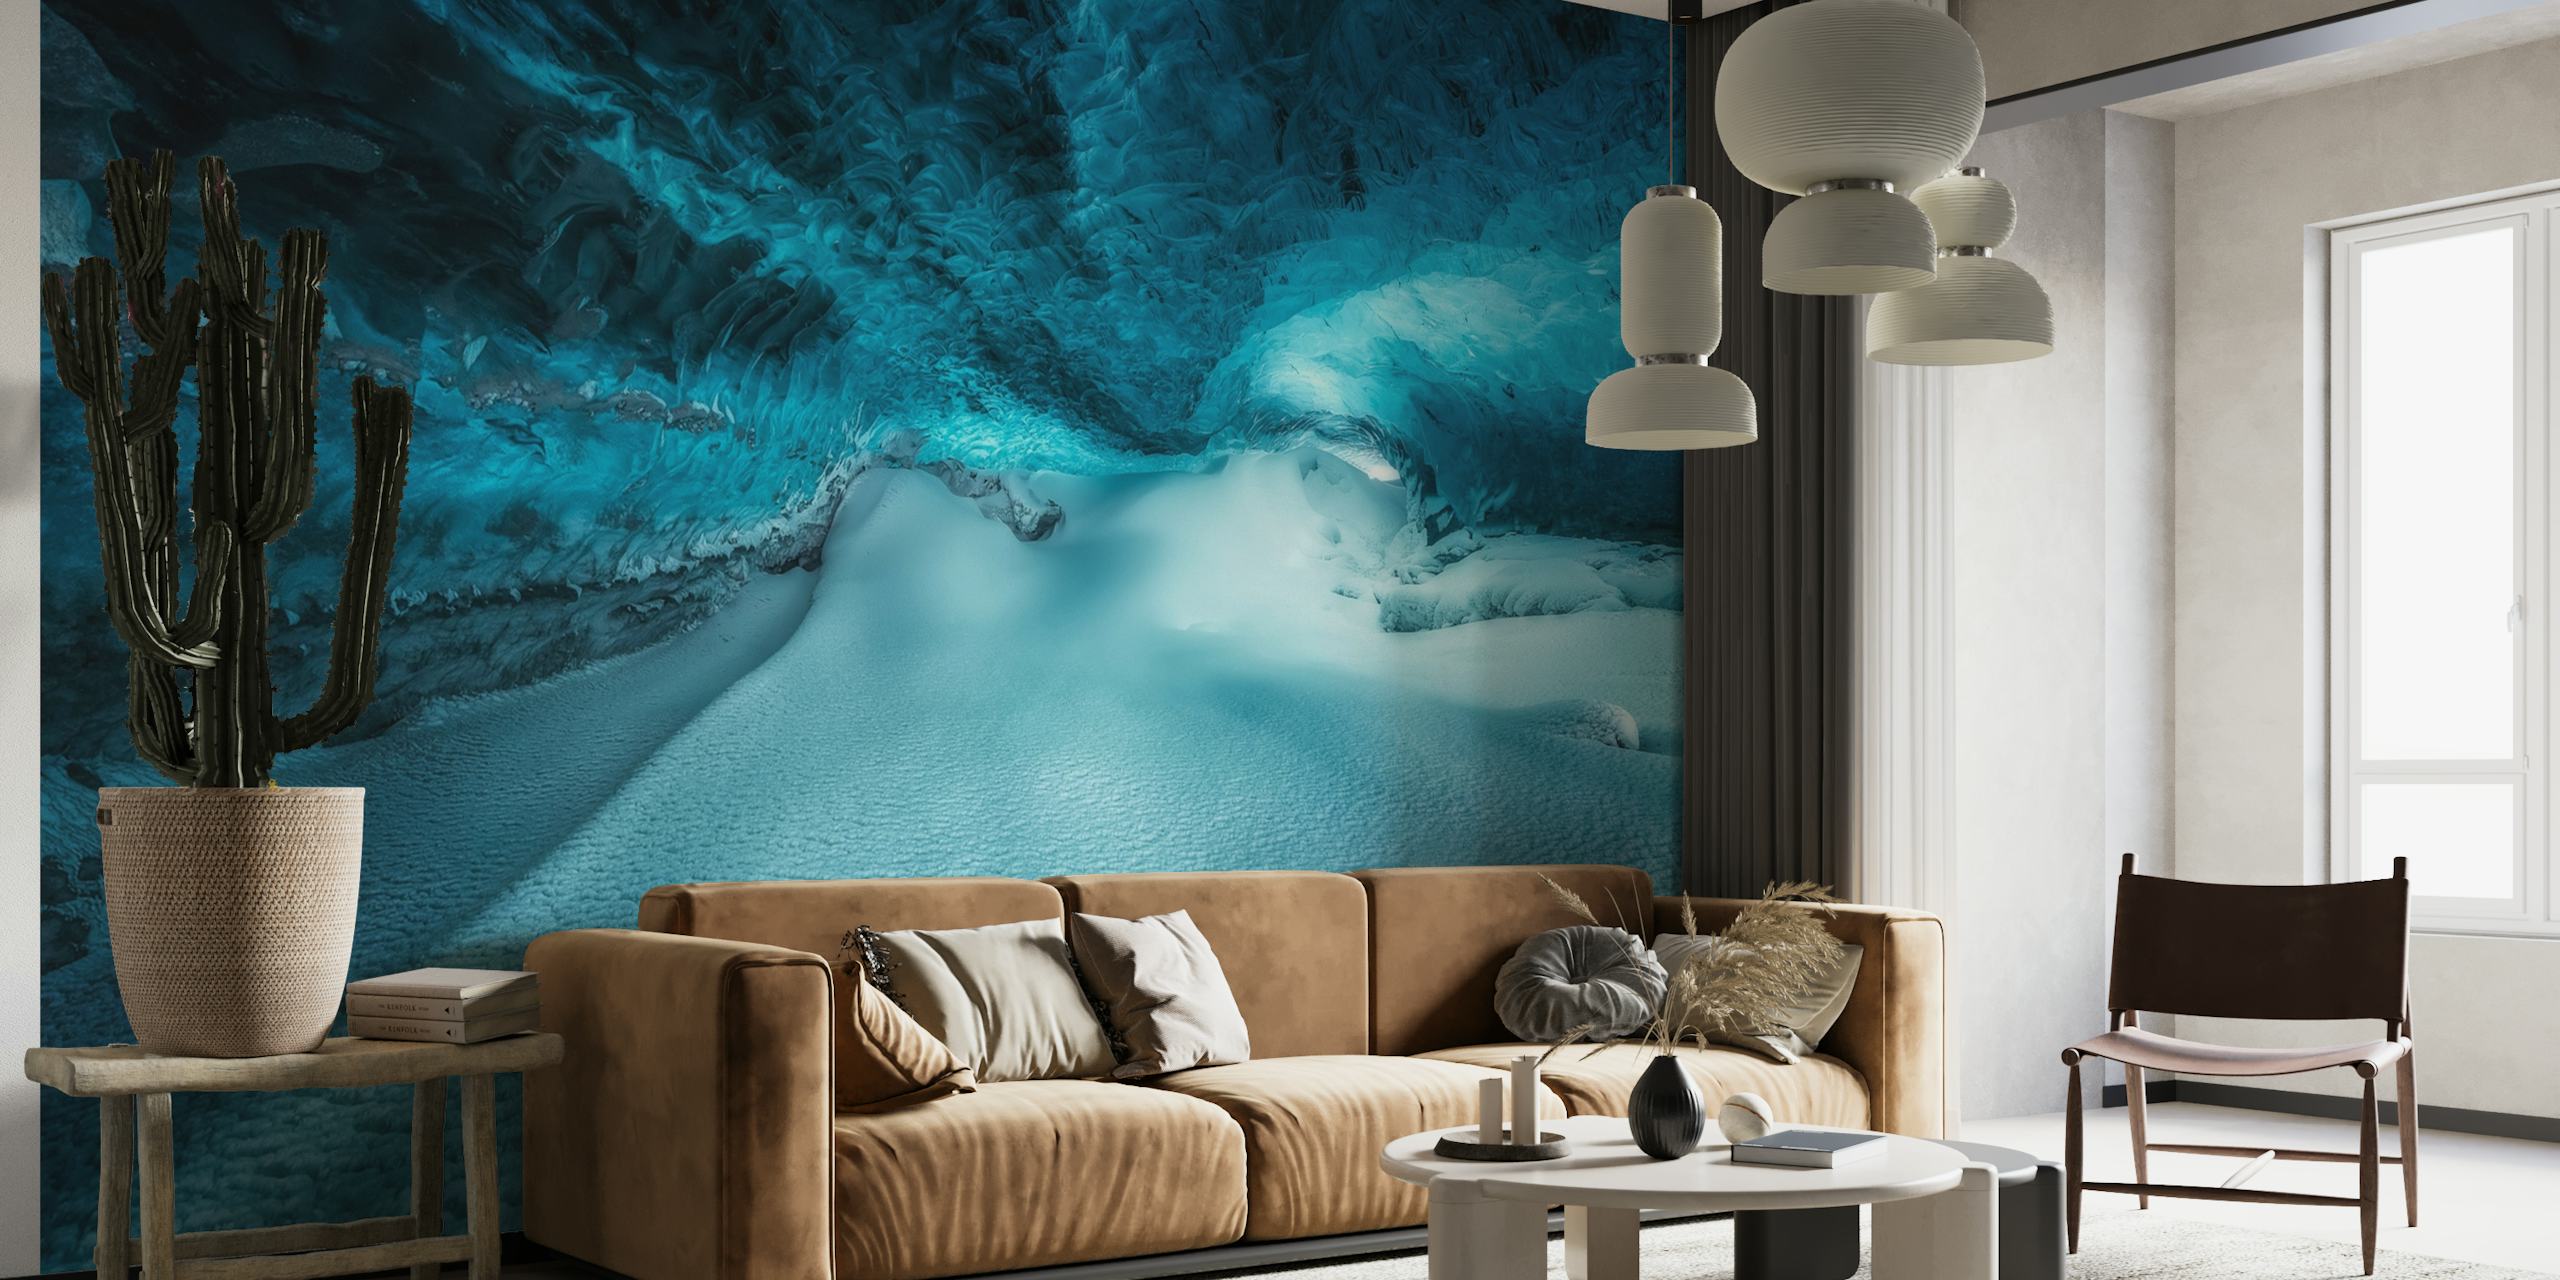 Murale murale di una caverna di ghiaccio sottomarina che mostra sfumature di blu e texture congelate